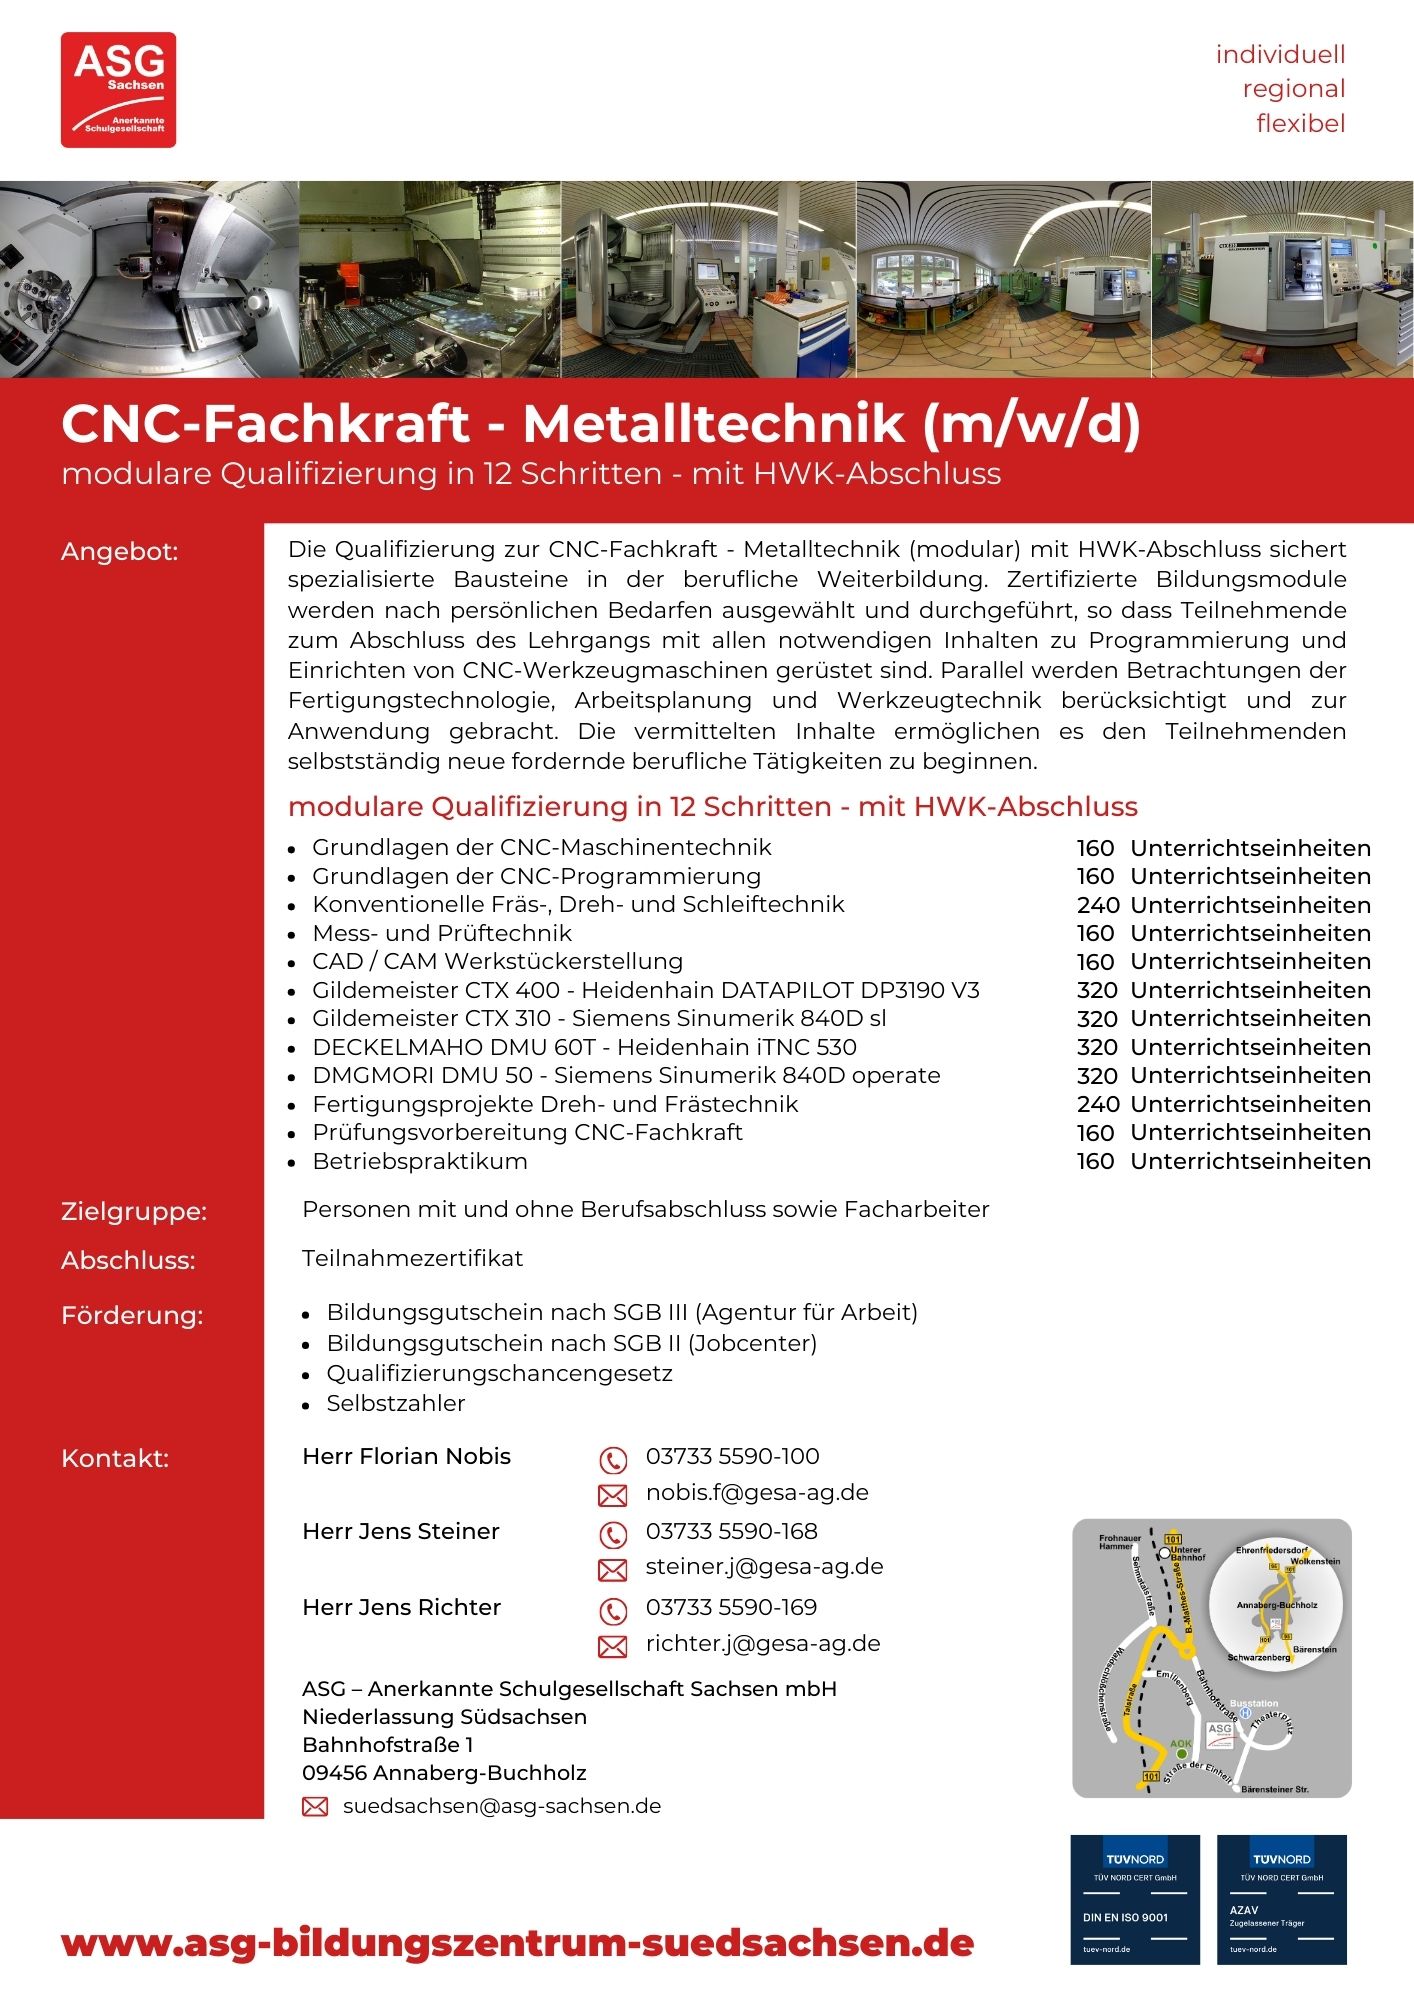 cnc_fachkraft_metalltechnik_qualifizierung2